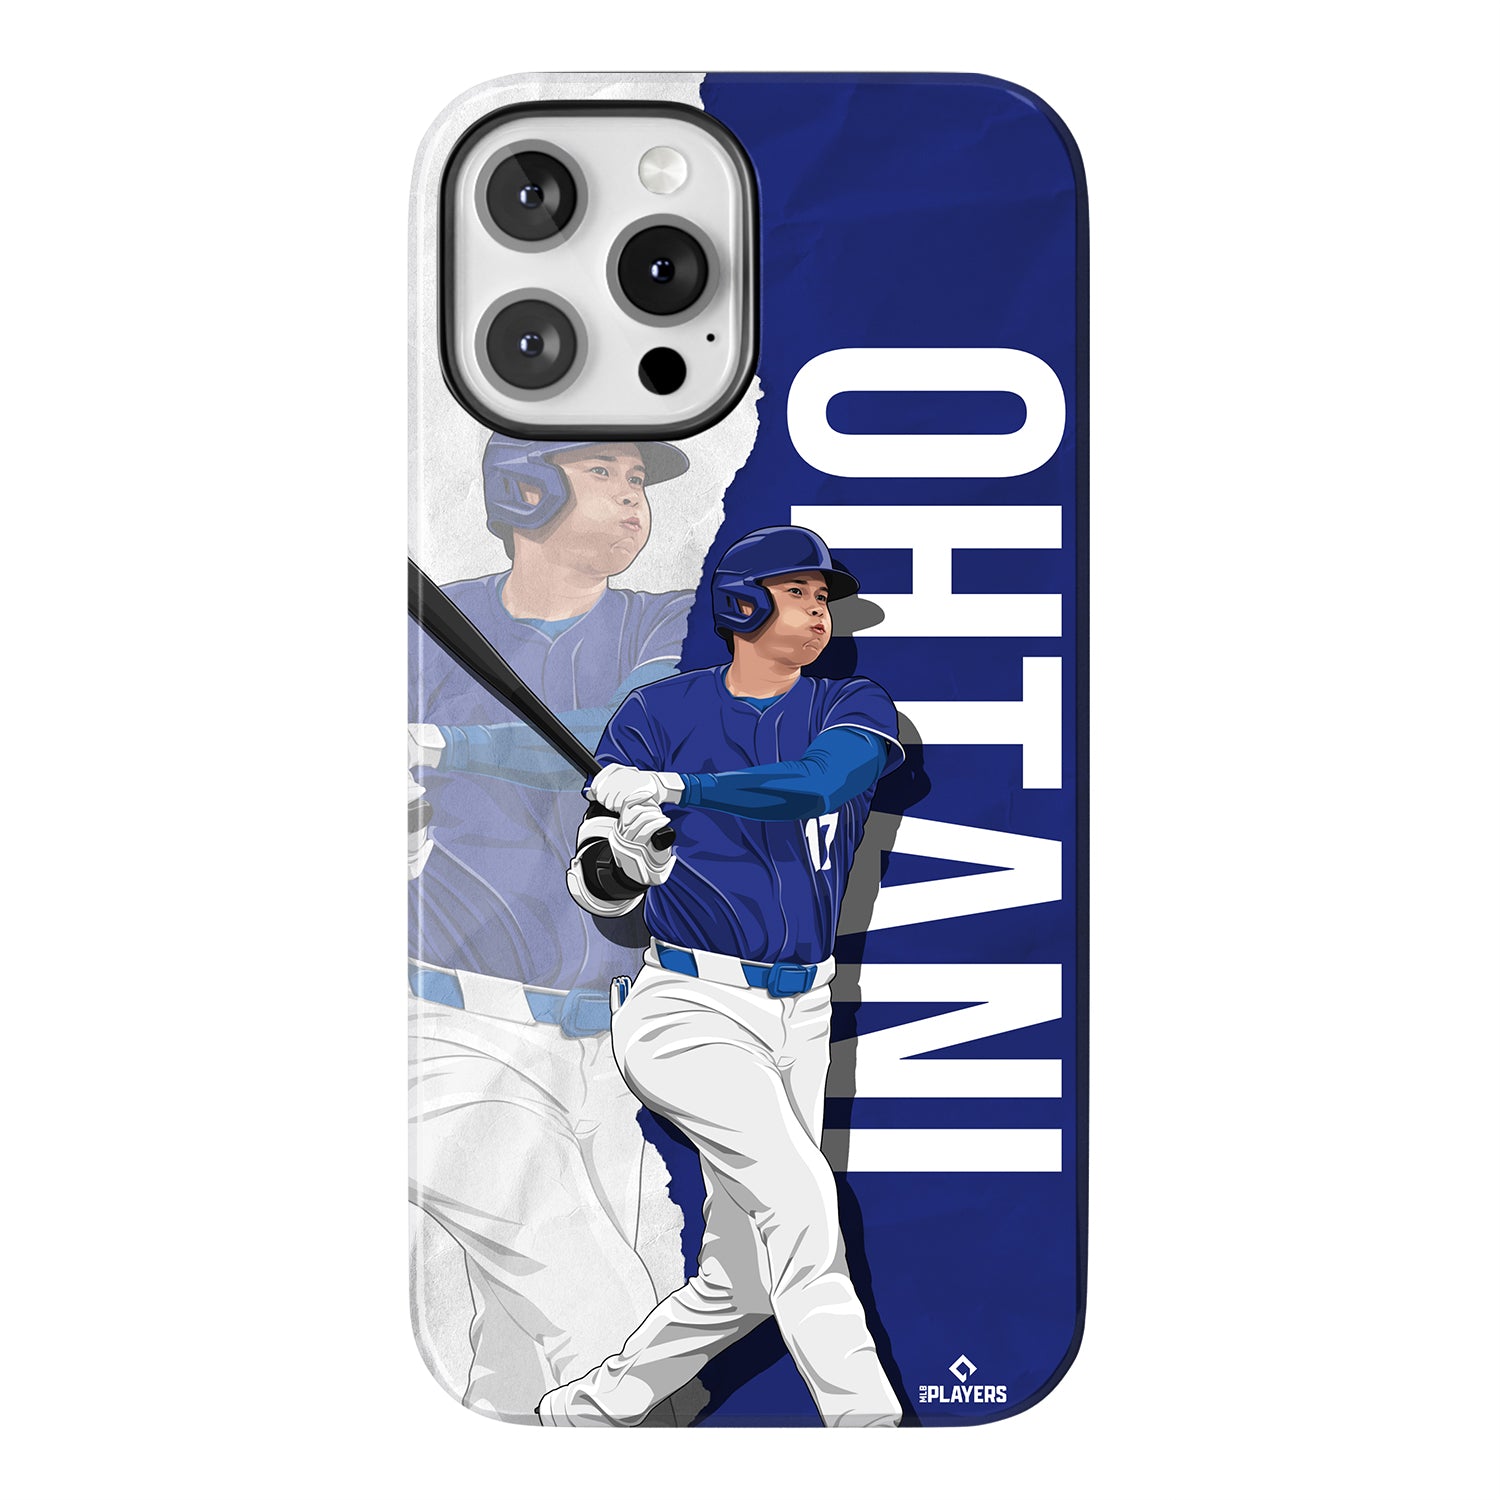 Ohtani Star Series 3.0 Phone Case